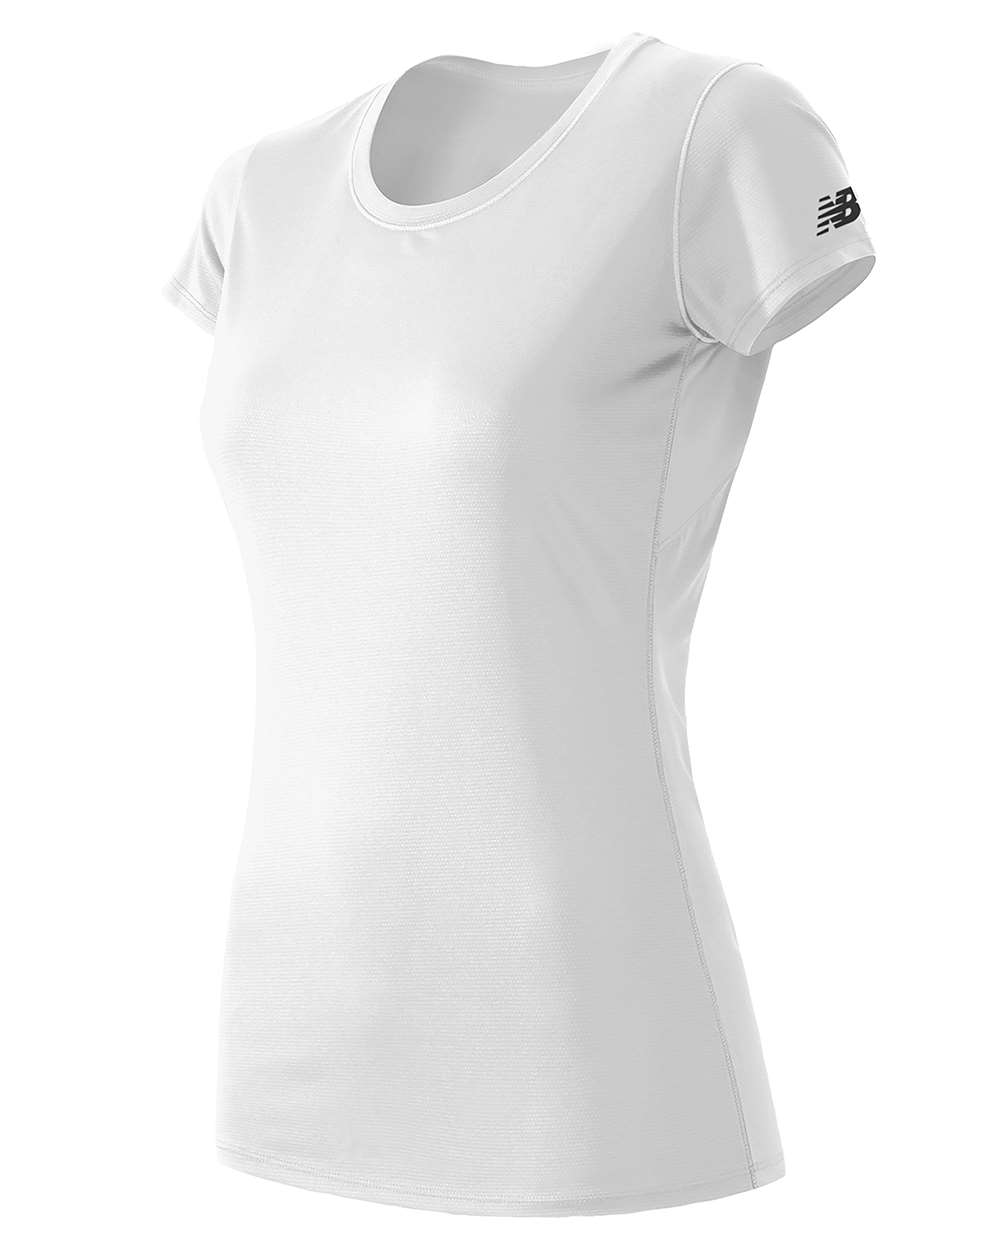 New Balance Women's Performance T-Shirt #WT81036P White